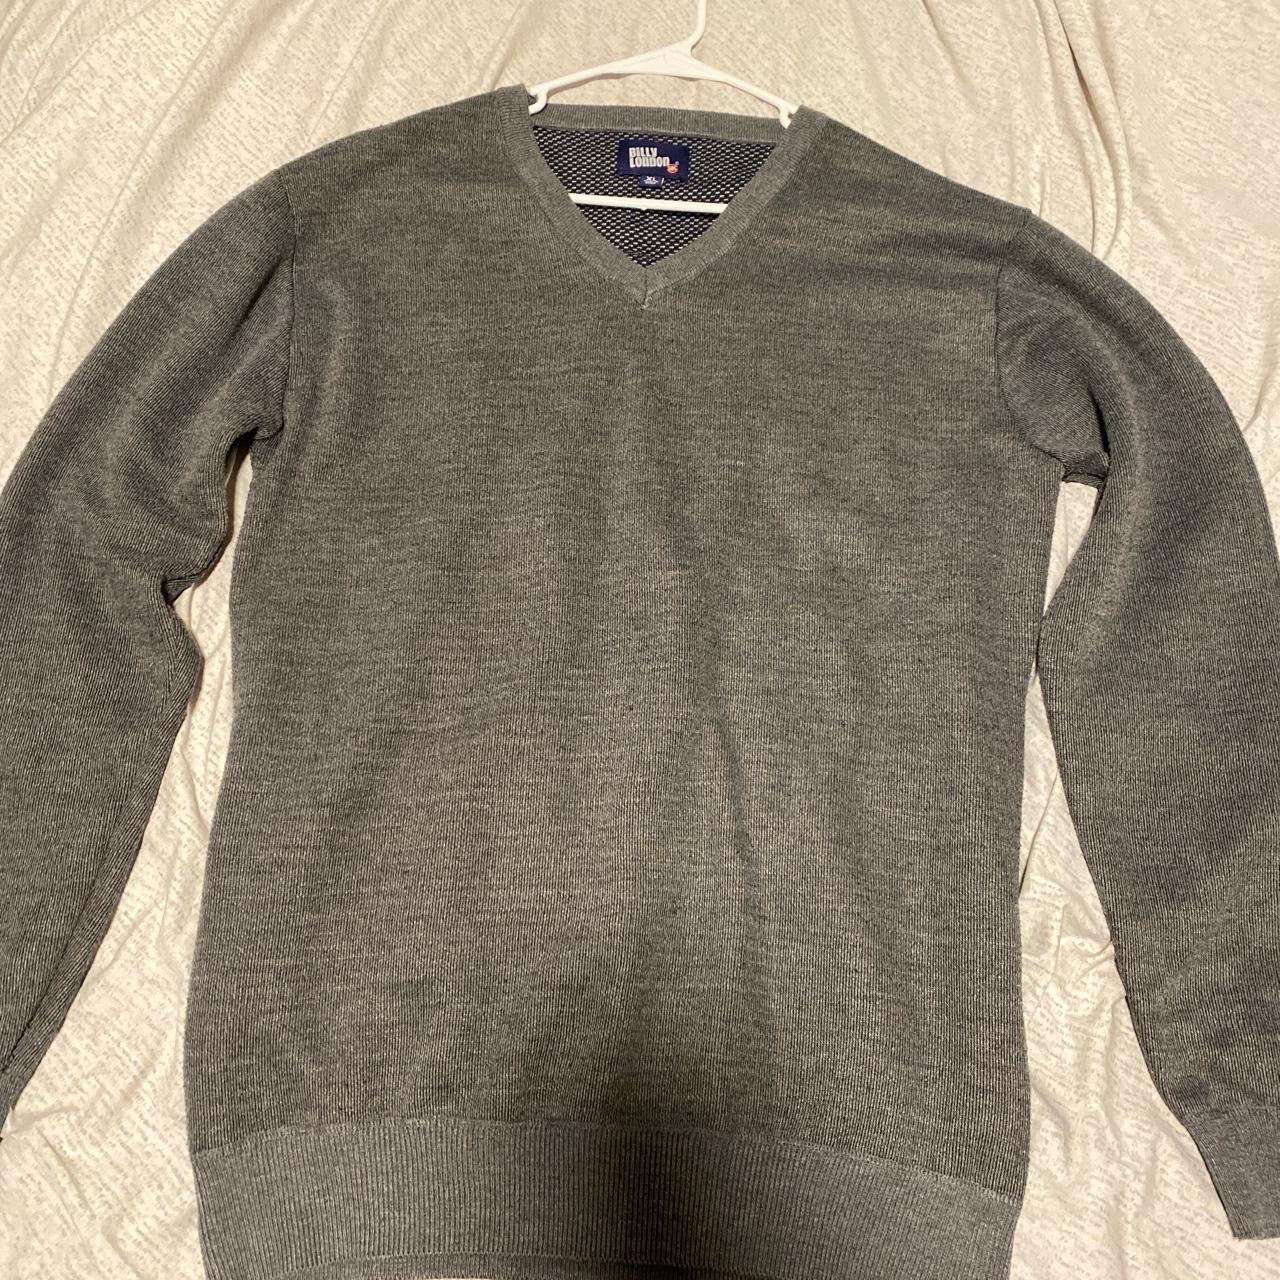 Product Image 2 - v-neck grey grandpa sweater
brand:billy london
width: